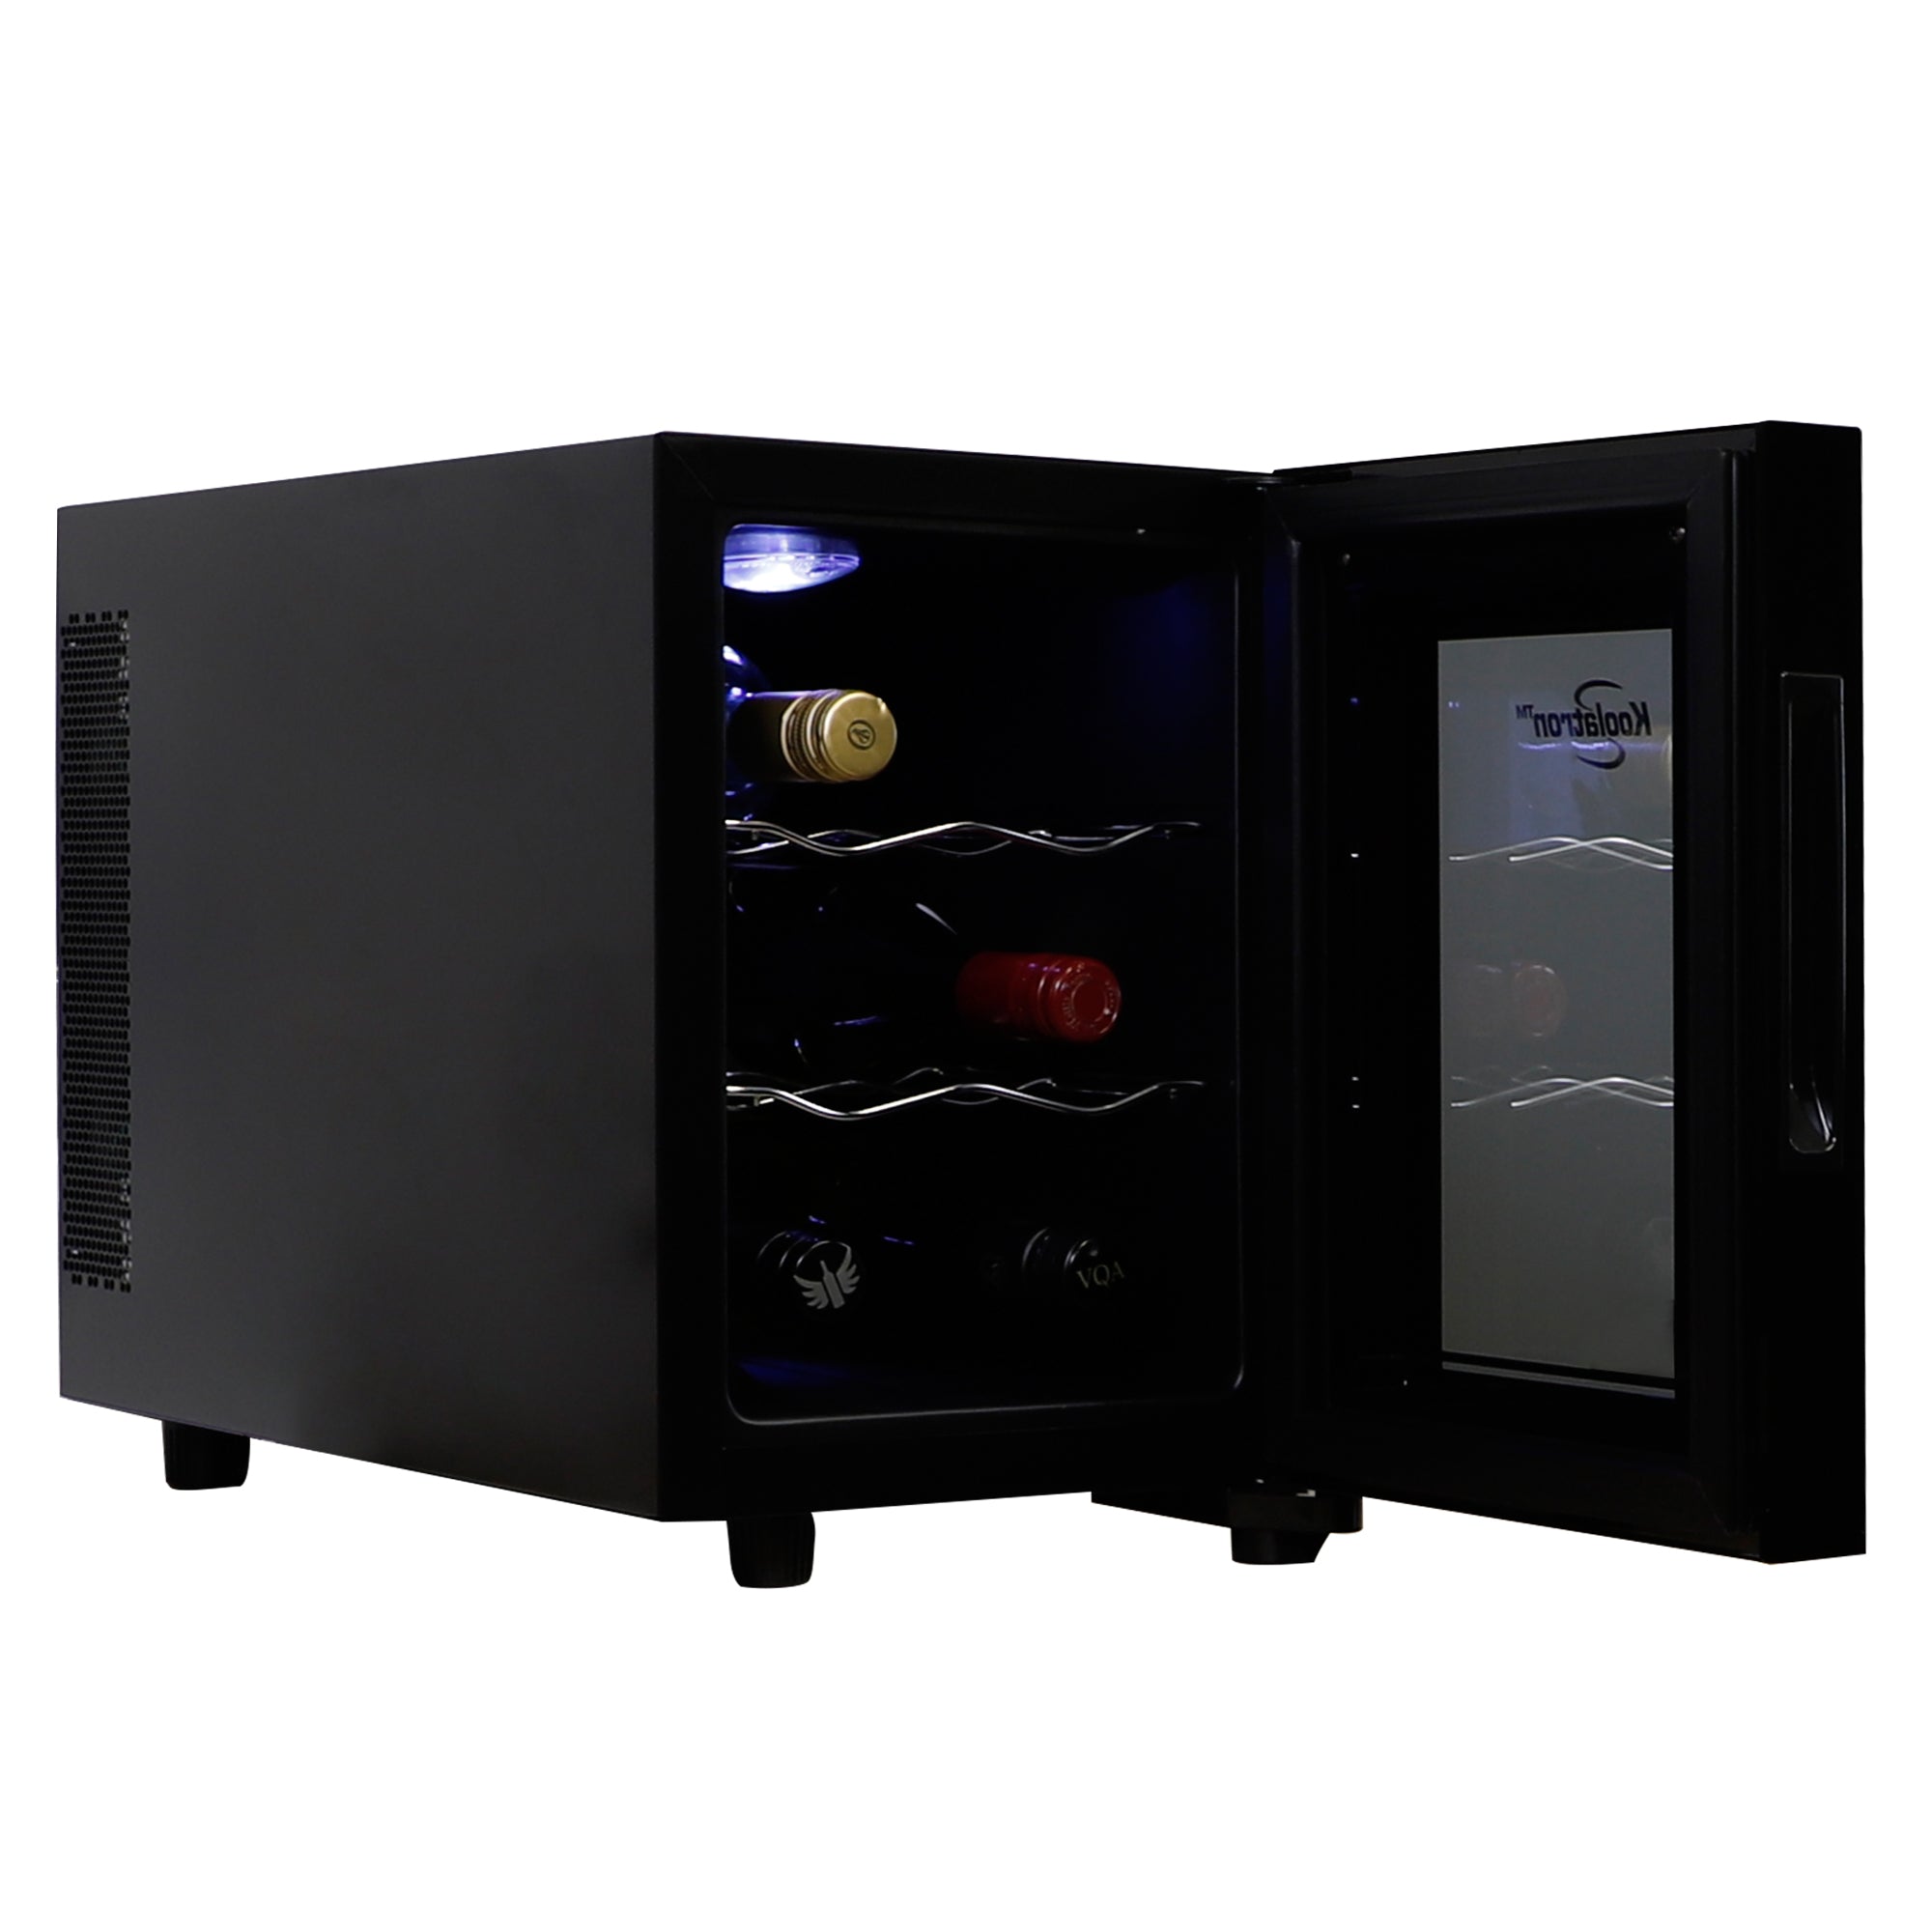 Koolatron 6 bottle wine cooler, open with bottles of wine inside, on a white background